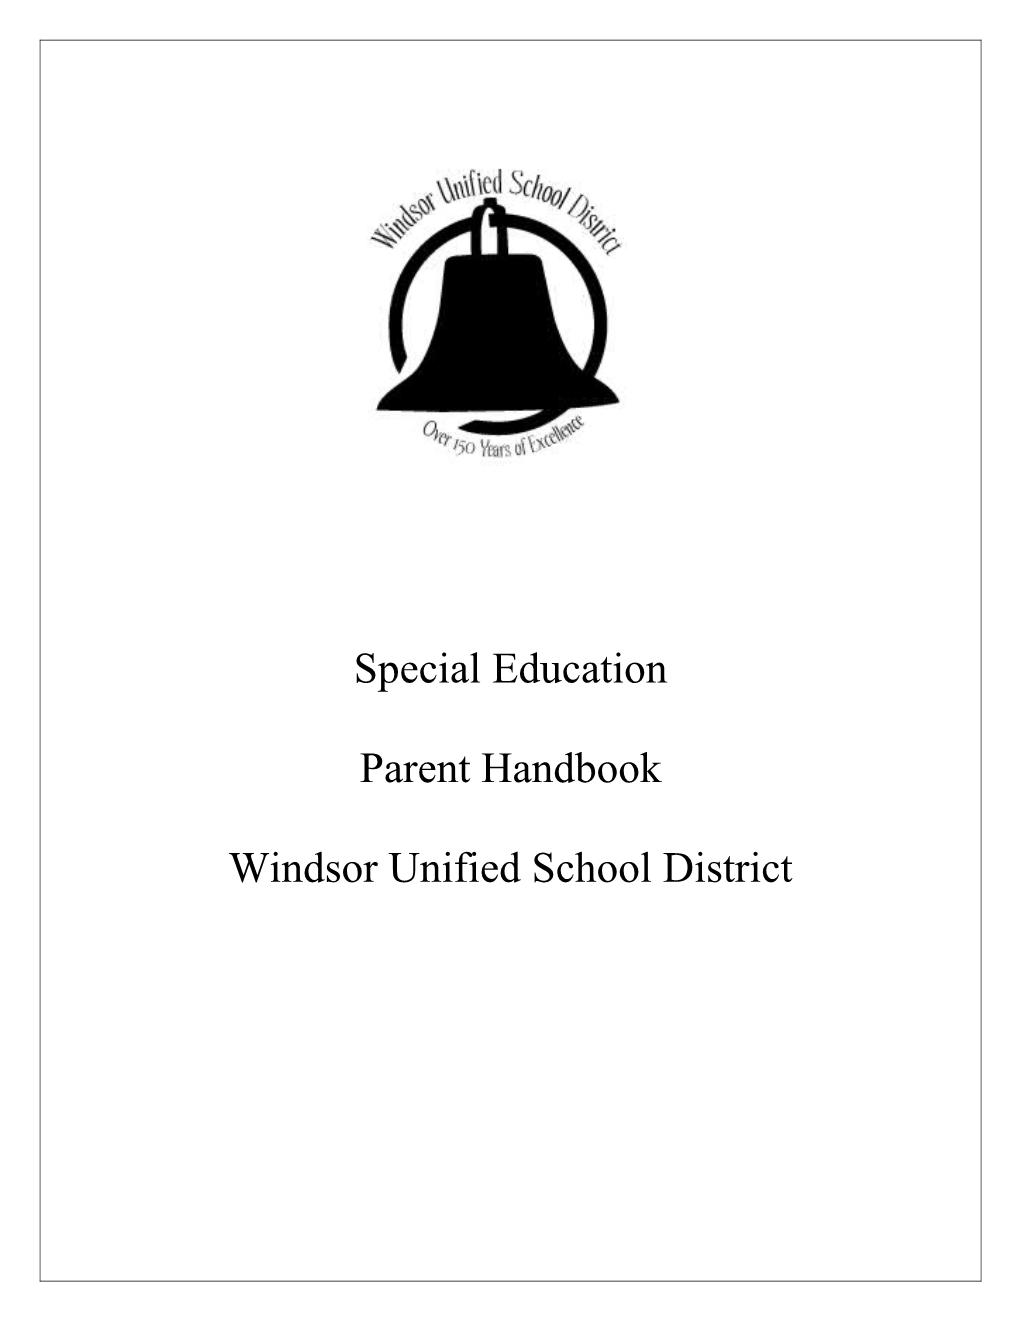 Windsor Unified School District